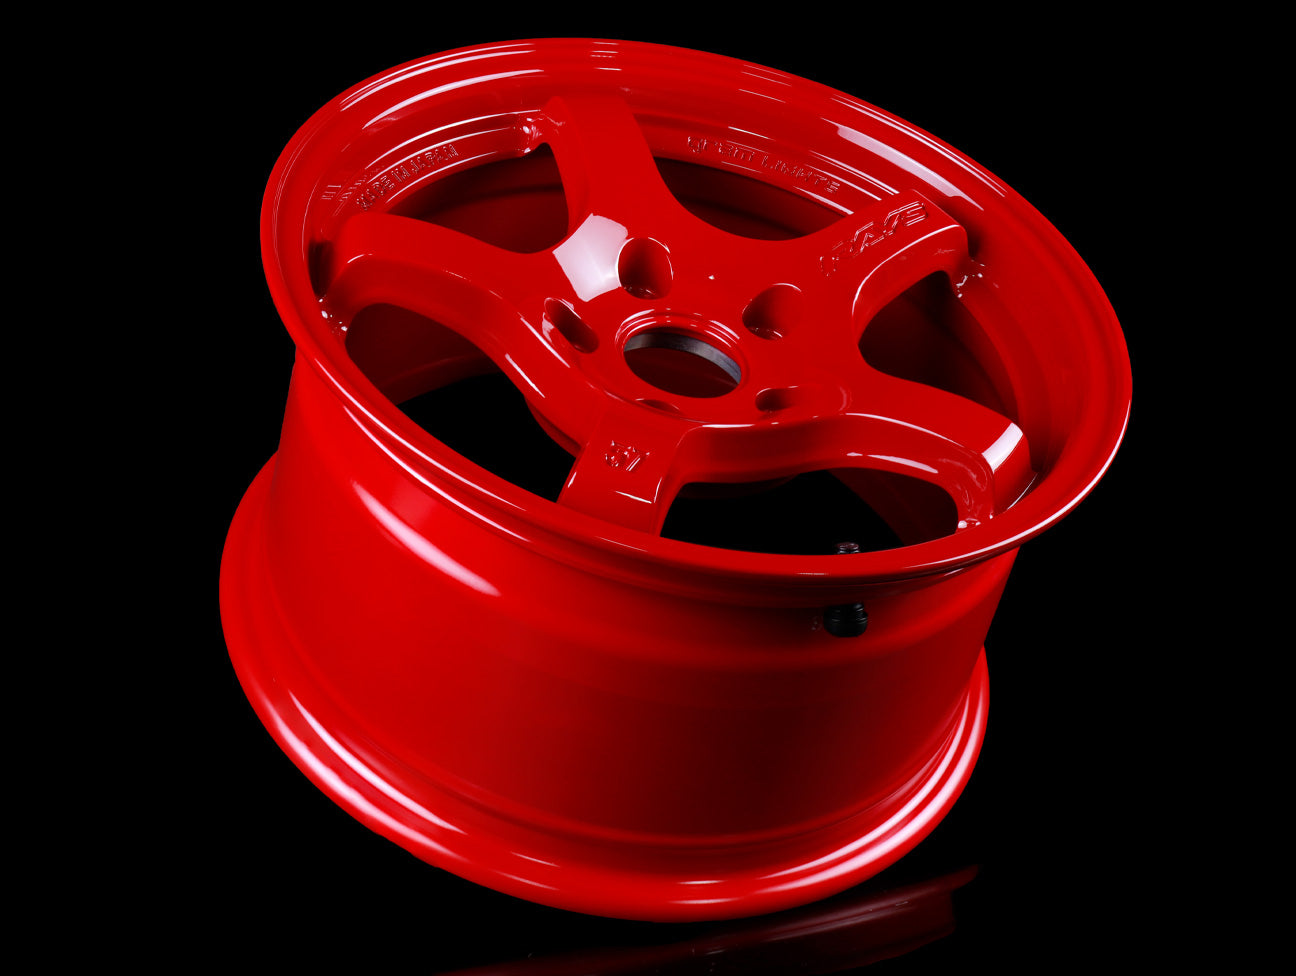 Rays Gram Lights 57CR Wheels - Milano Red 15x8.0 / 5x114 / +35